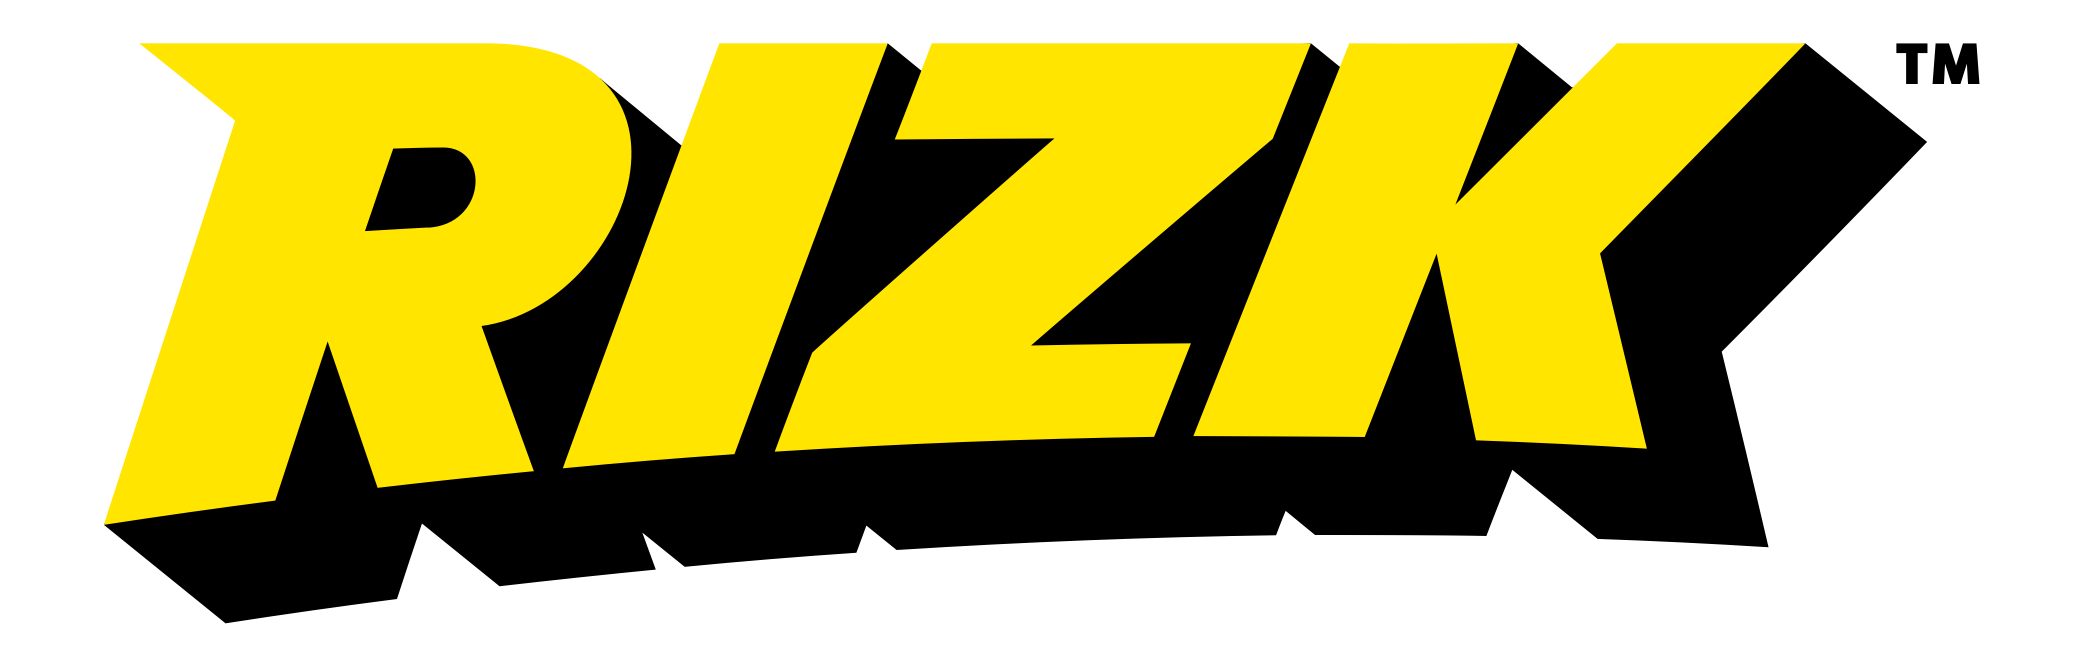 logo kasyna Rizk